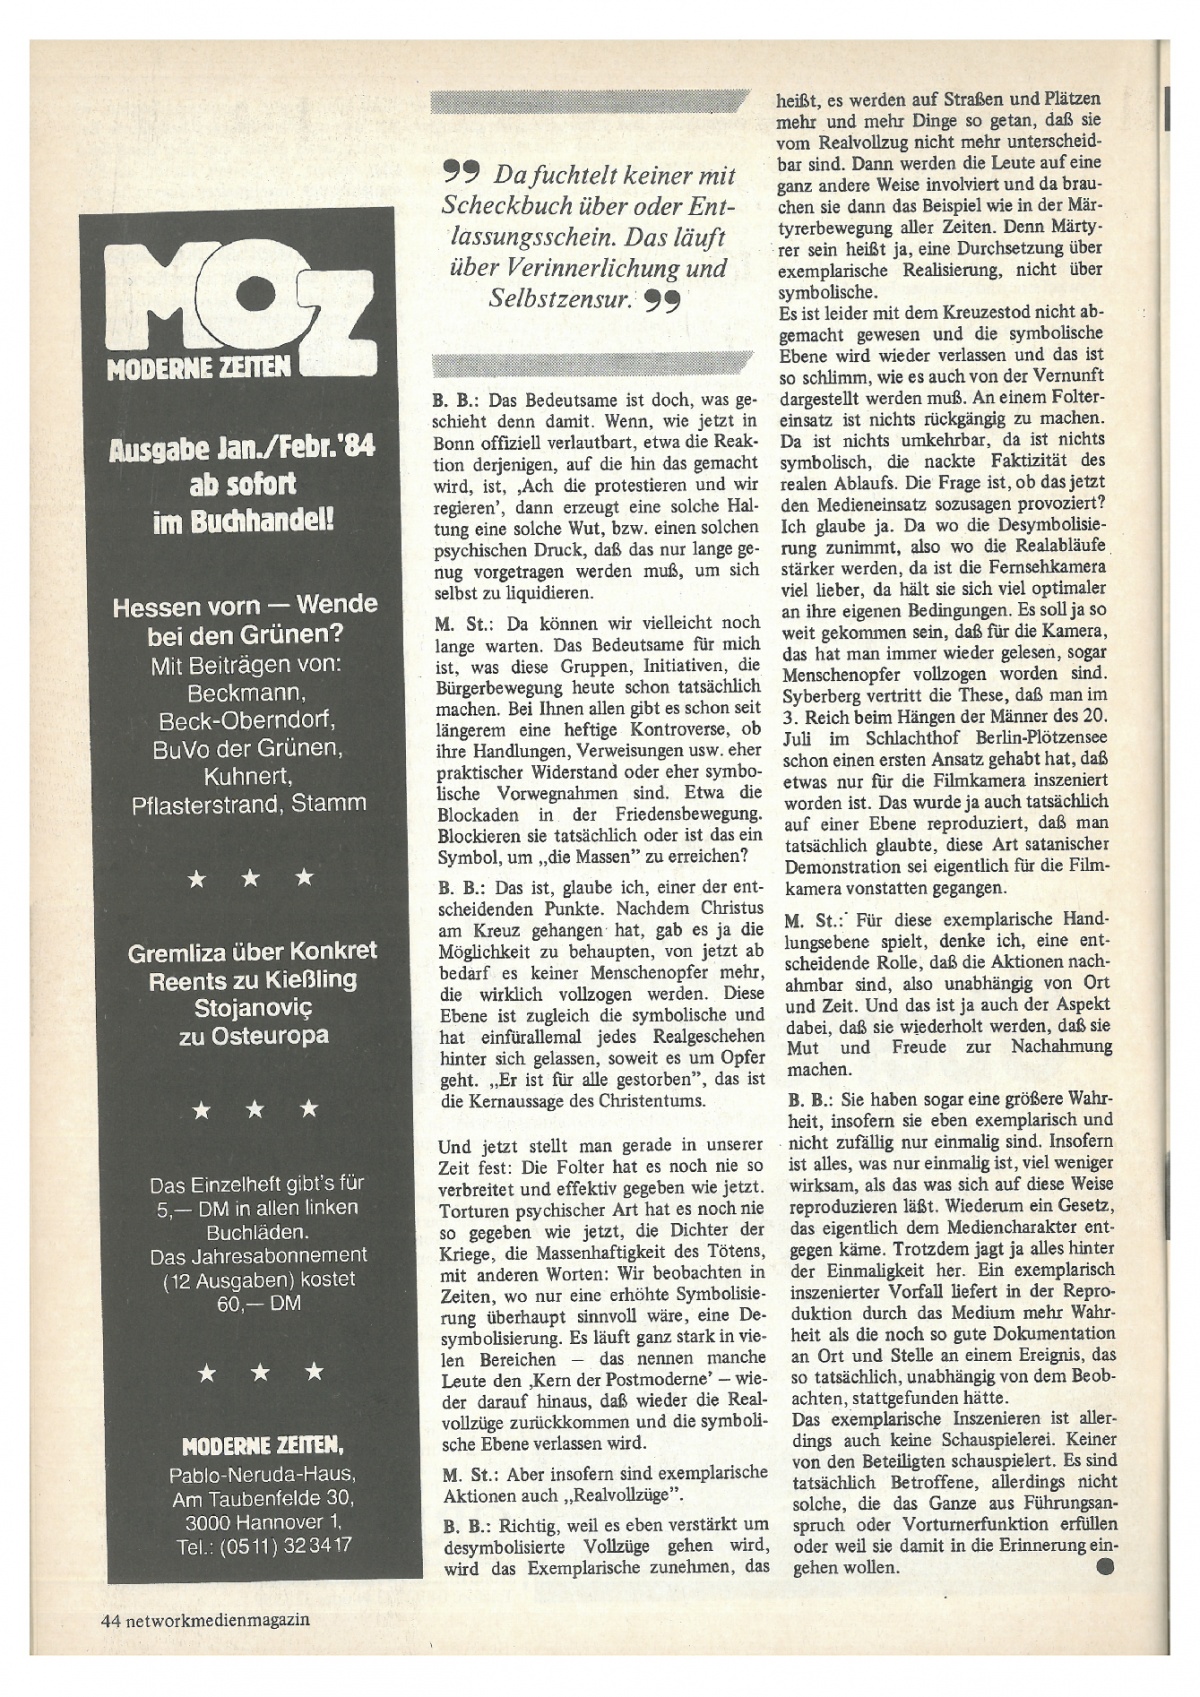 Medien Magazin 6/1984, Bild: S. 44.